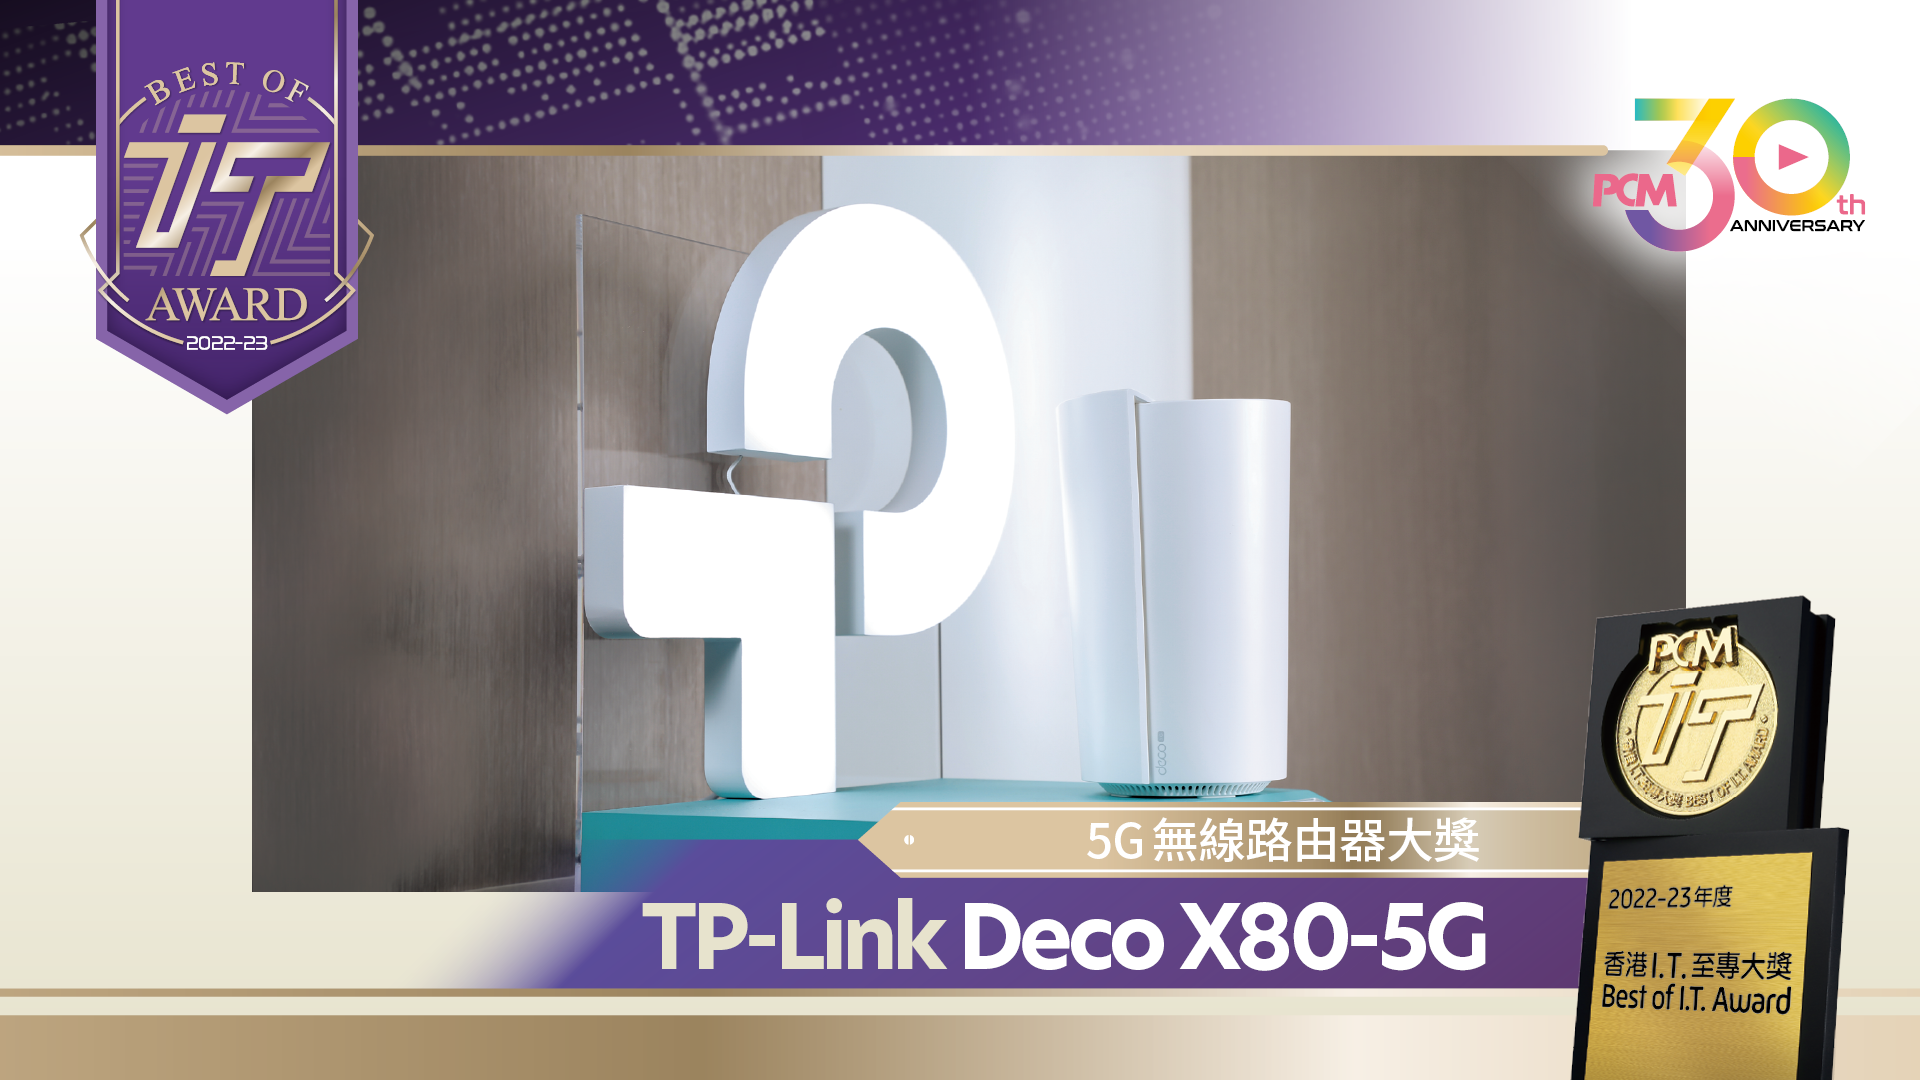 5G 無線路由器大獎 TP-Link Deco X80-5G